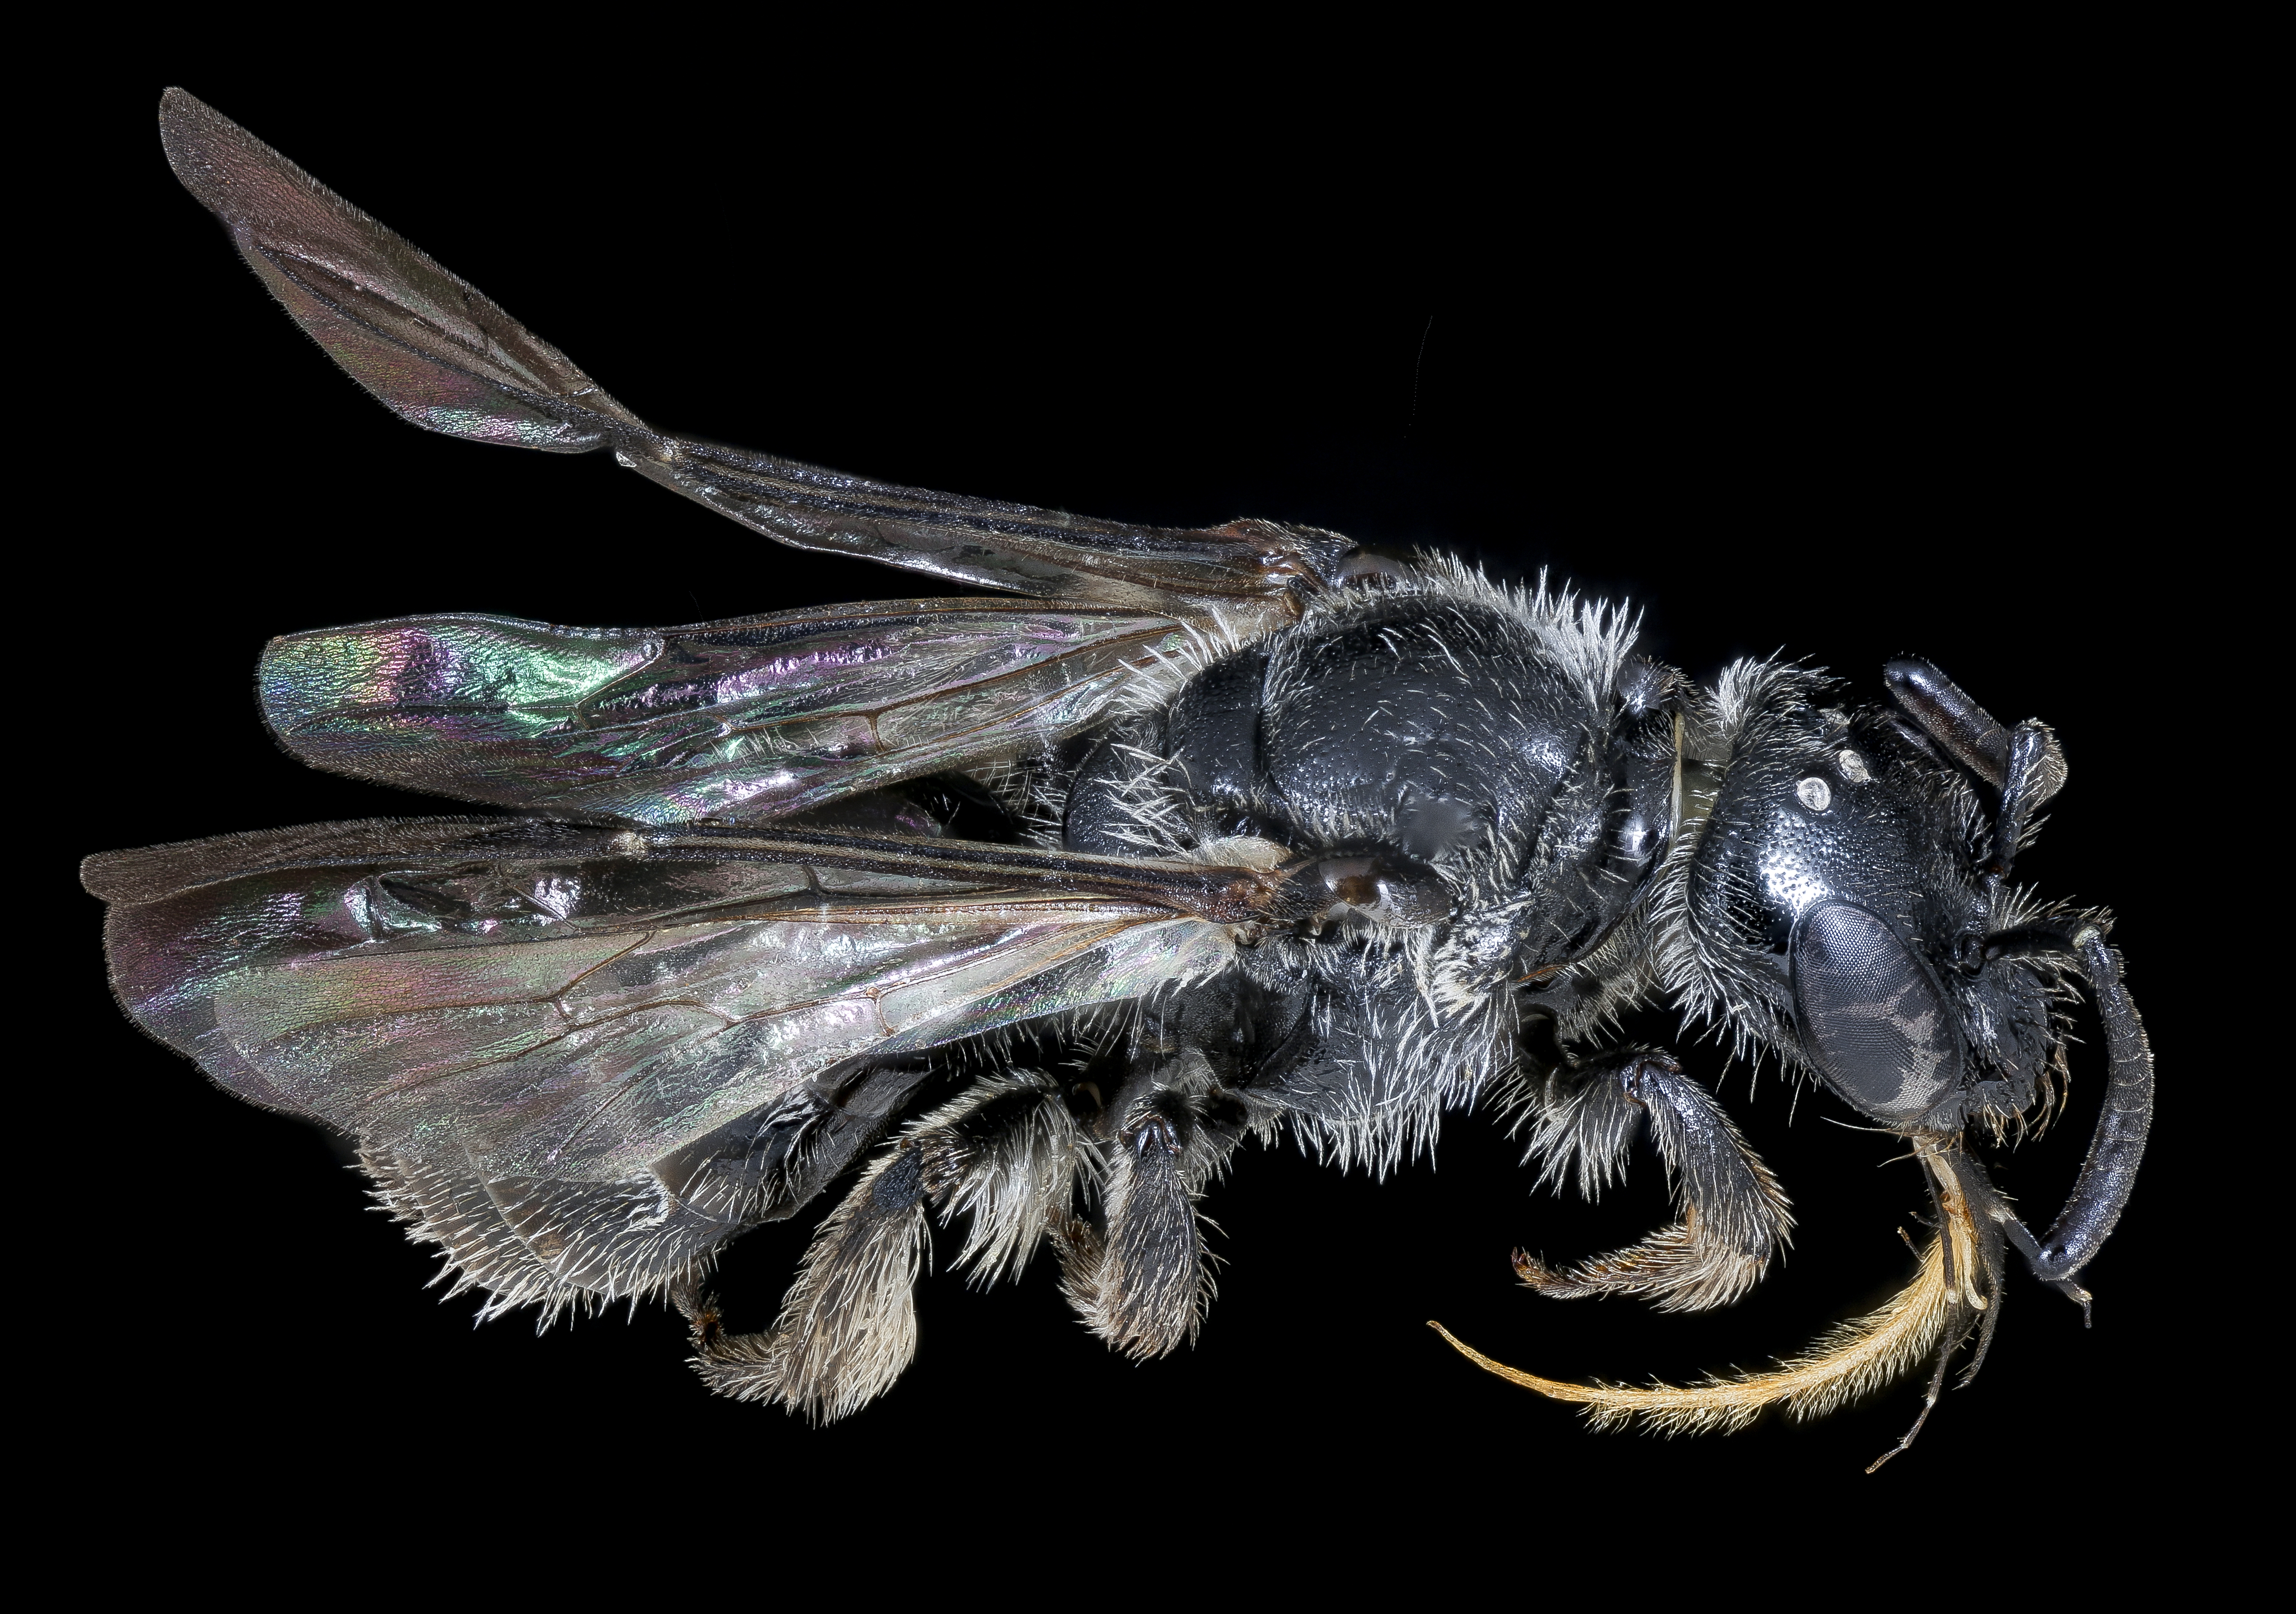 An all black bee, Dufourea monardae